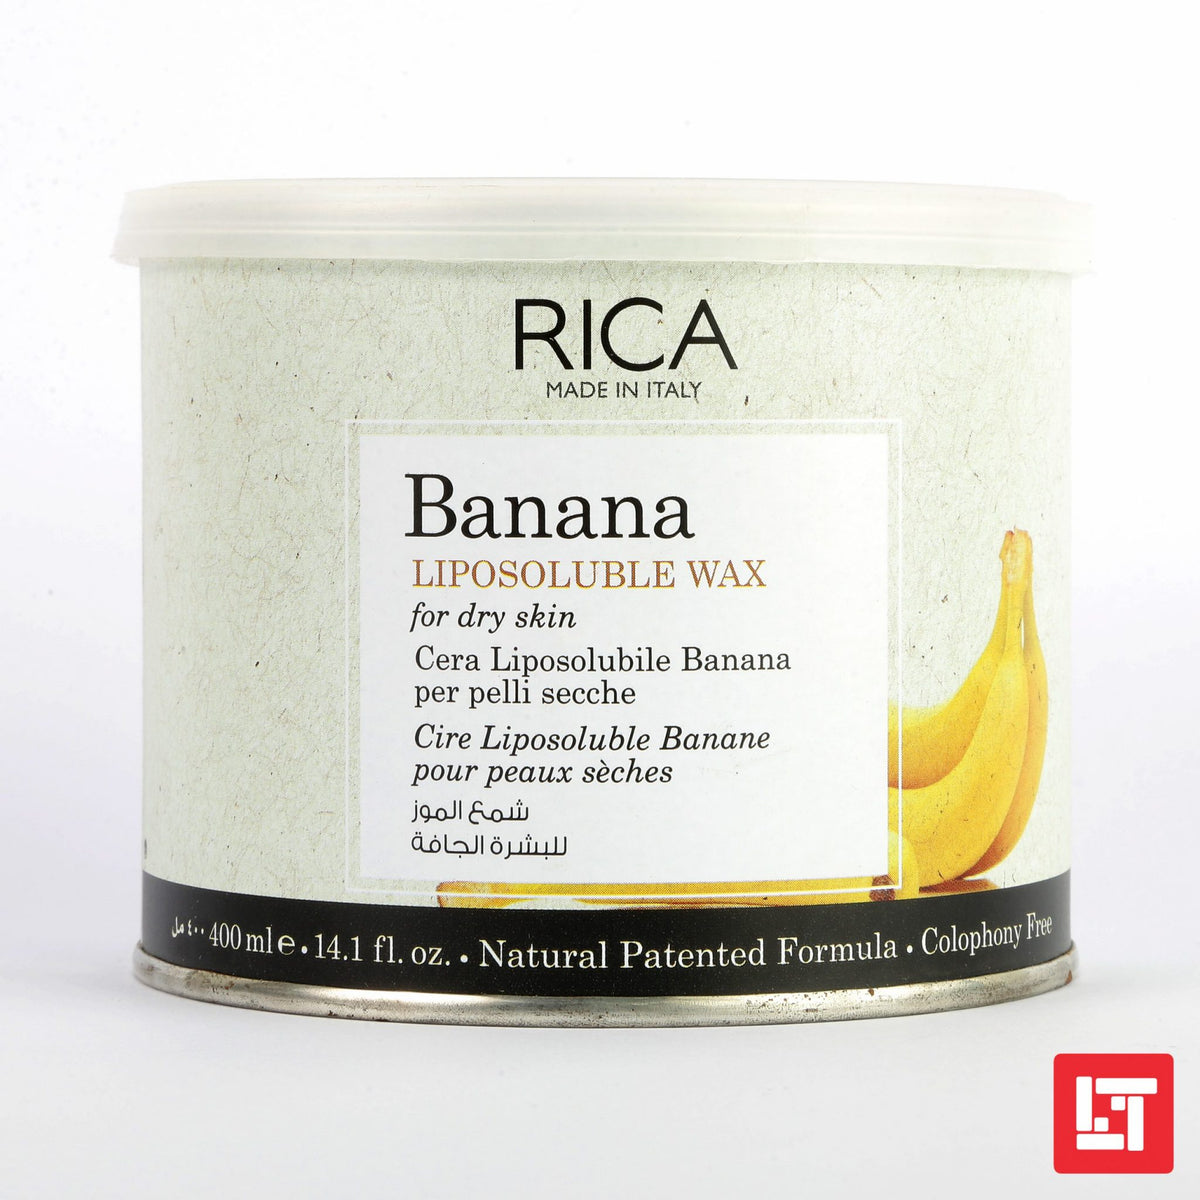 RICA Liposoluble Wax For Sensitive Skin Banana 400ml freeshipping - lasertag.pk